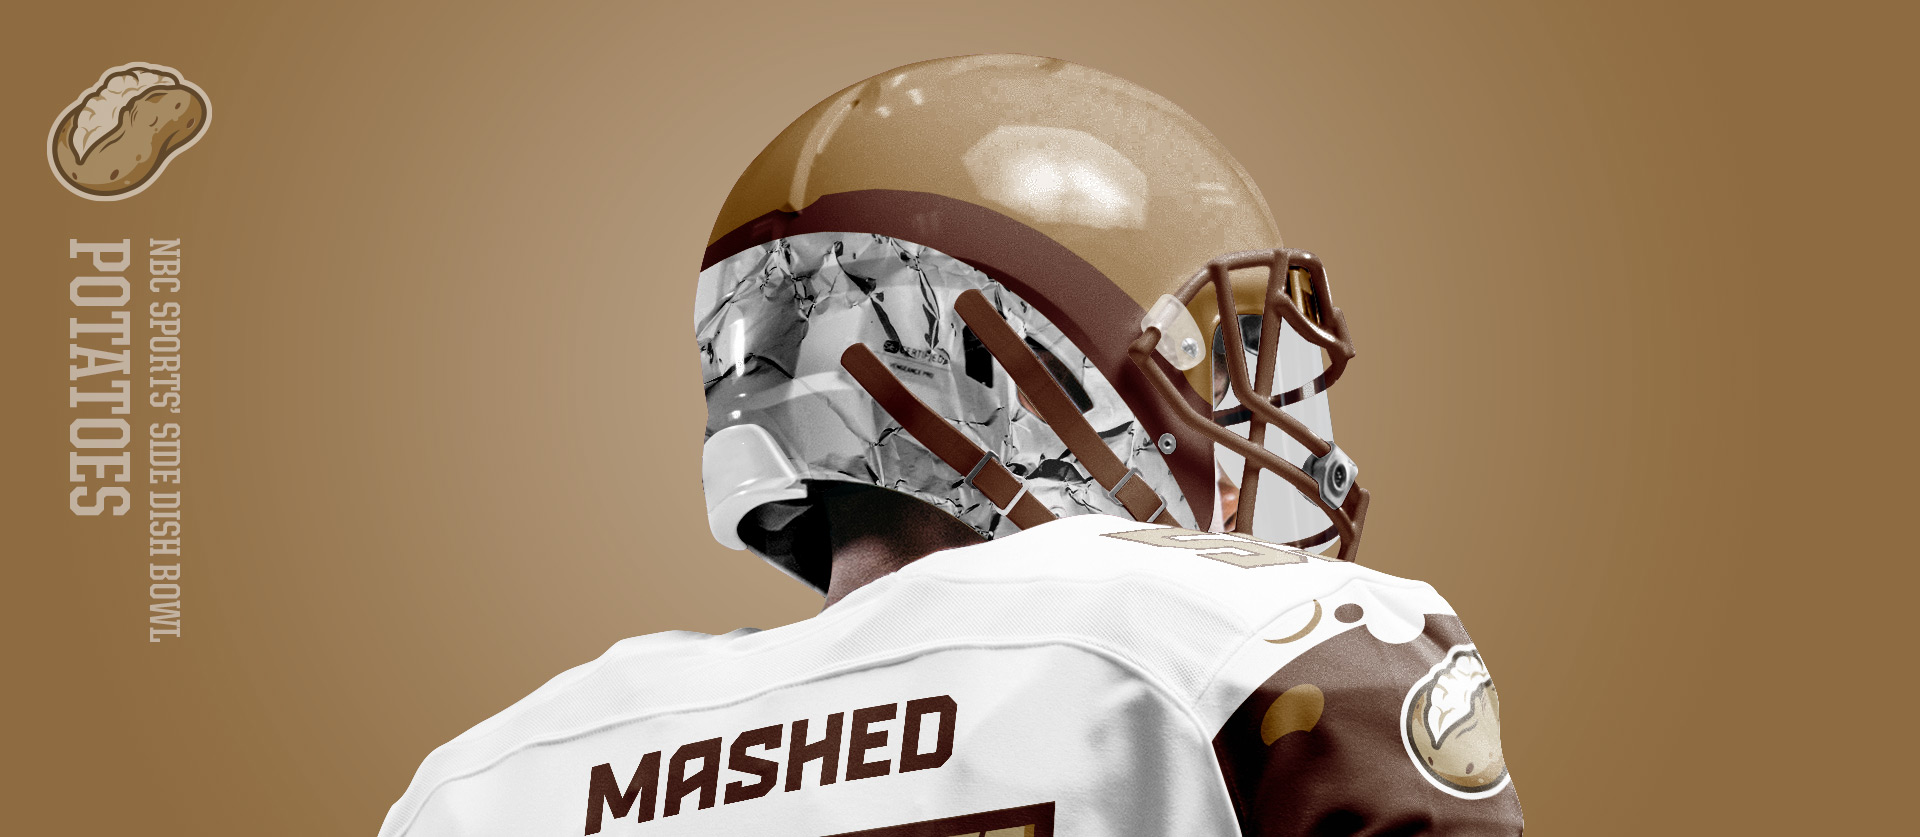 Potatoes Helmet Backside - Football Uniform Design for NBC Sports Thanksgiving Side Dish Bowl